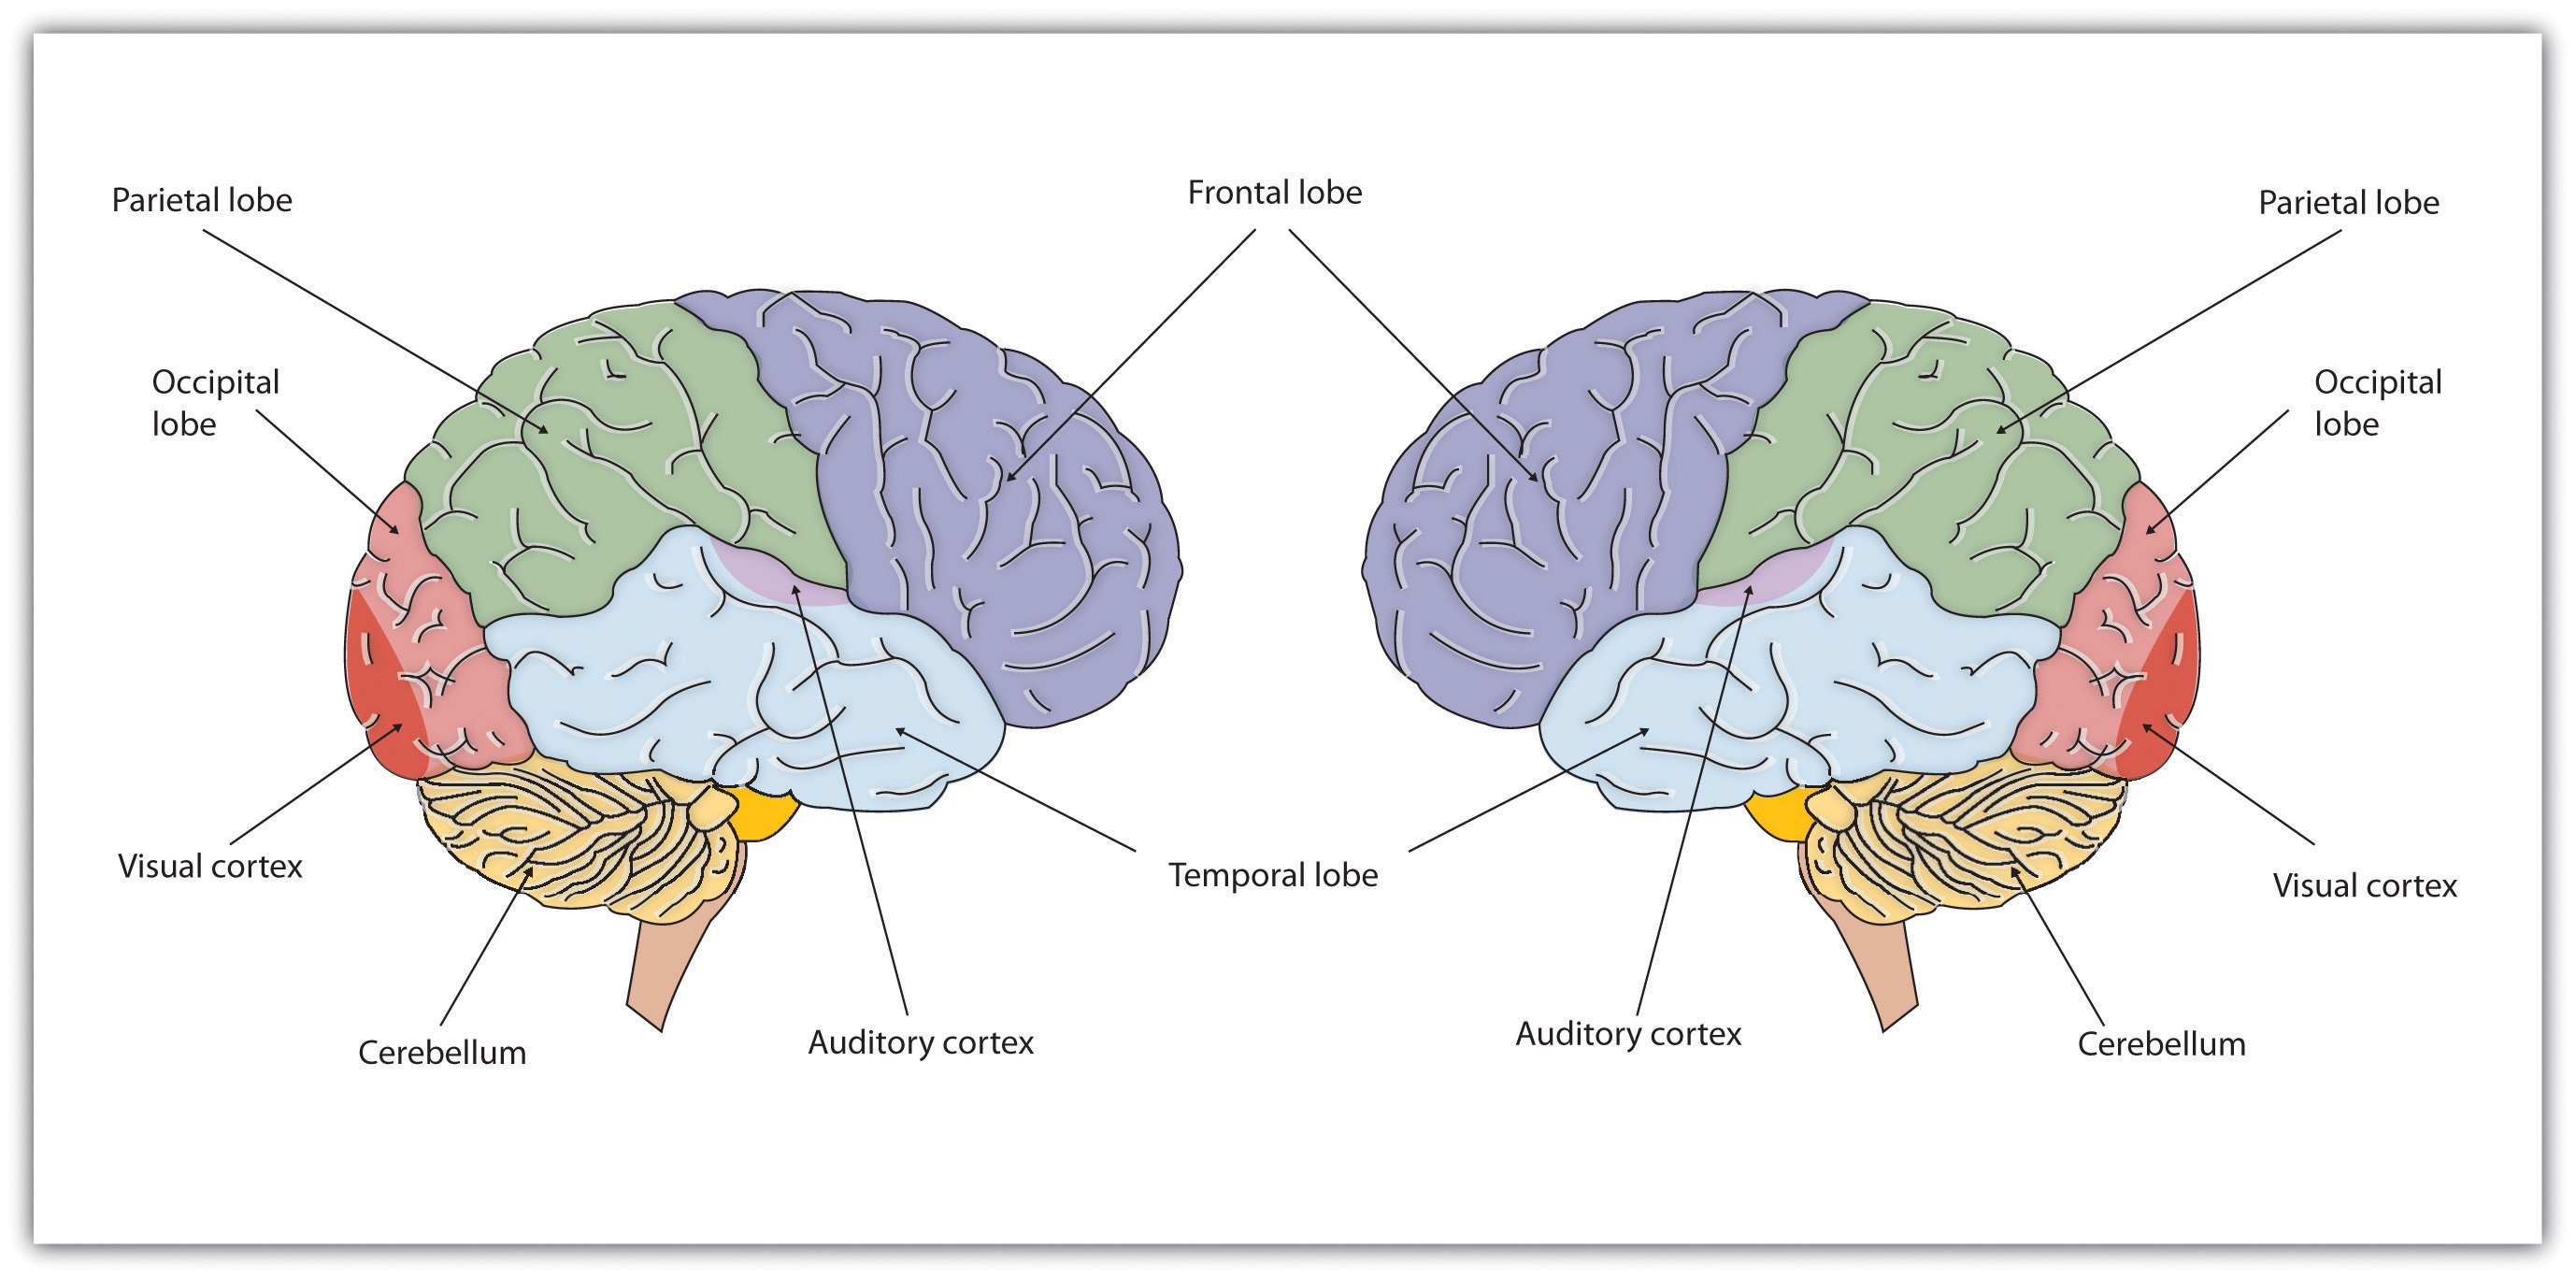 The two brain hemispheres